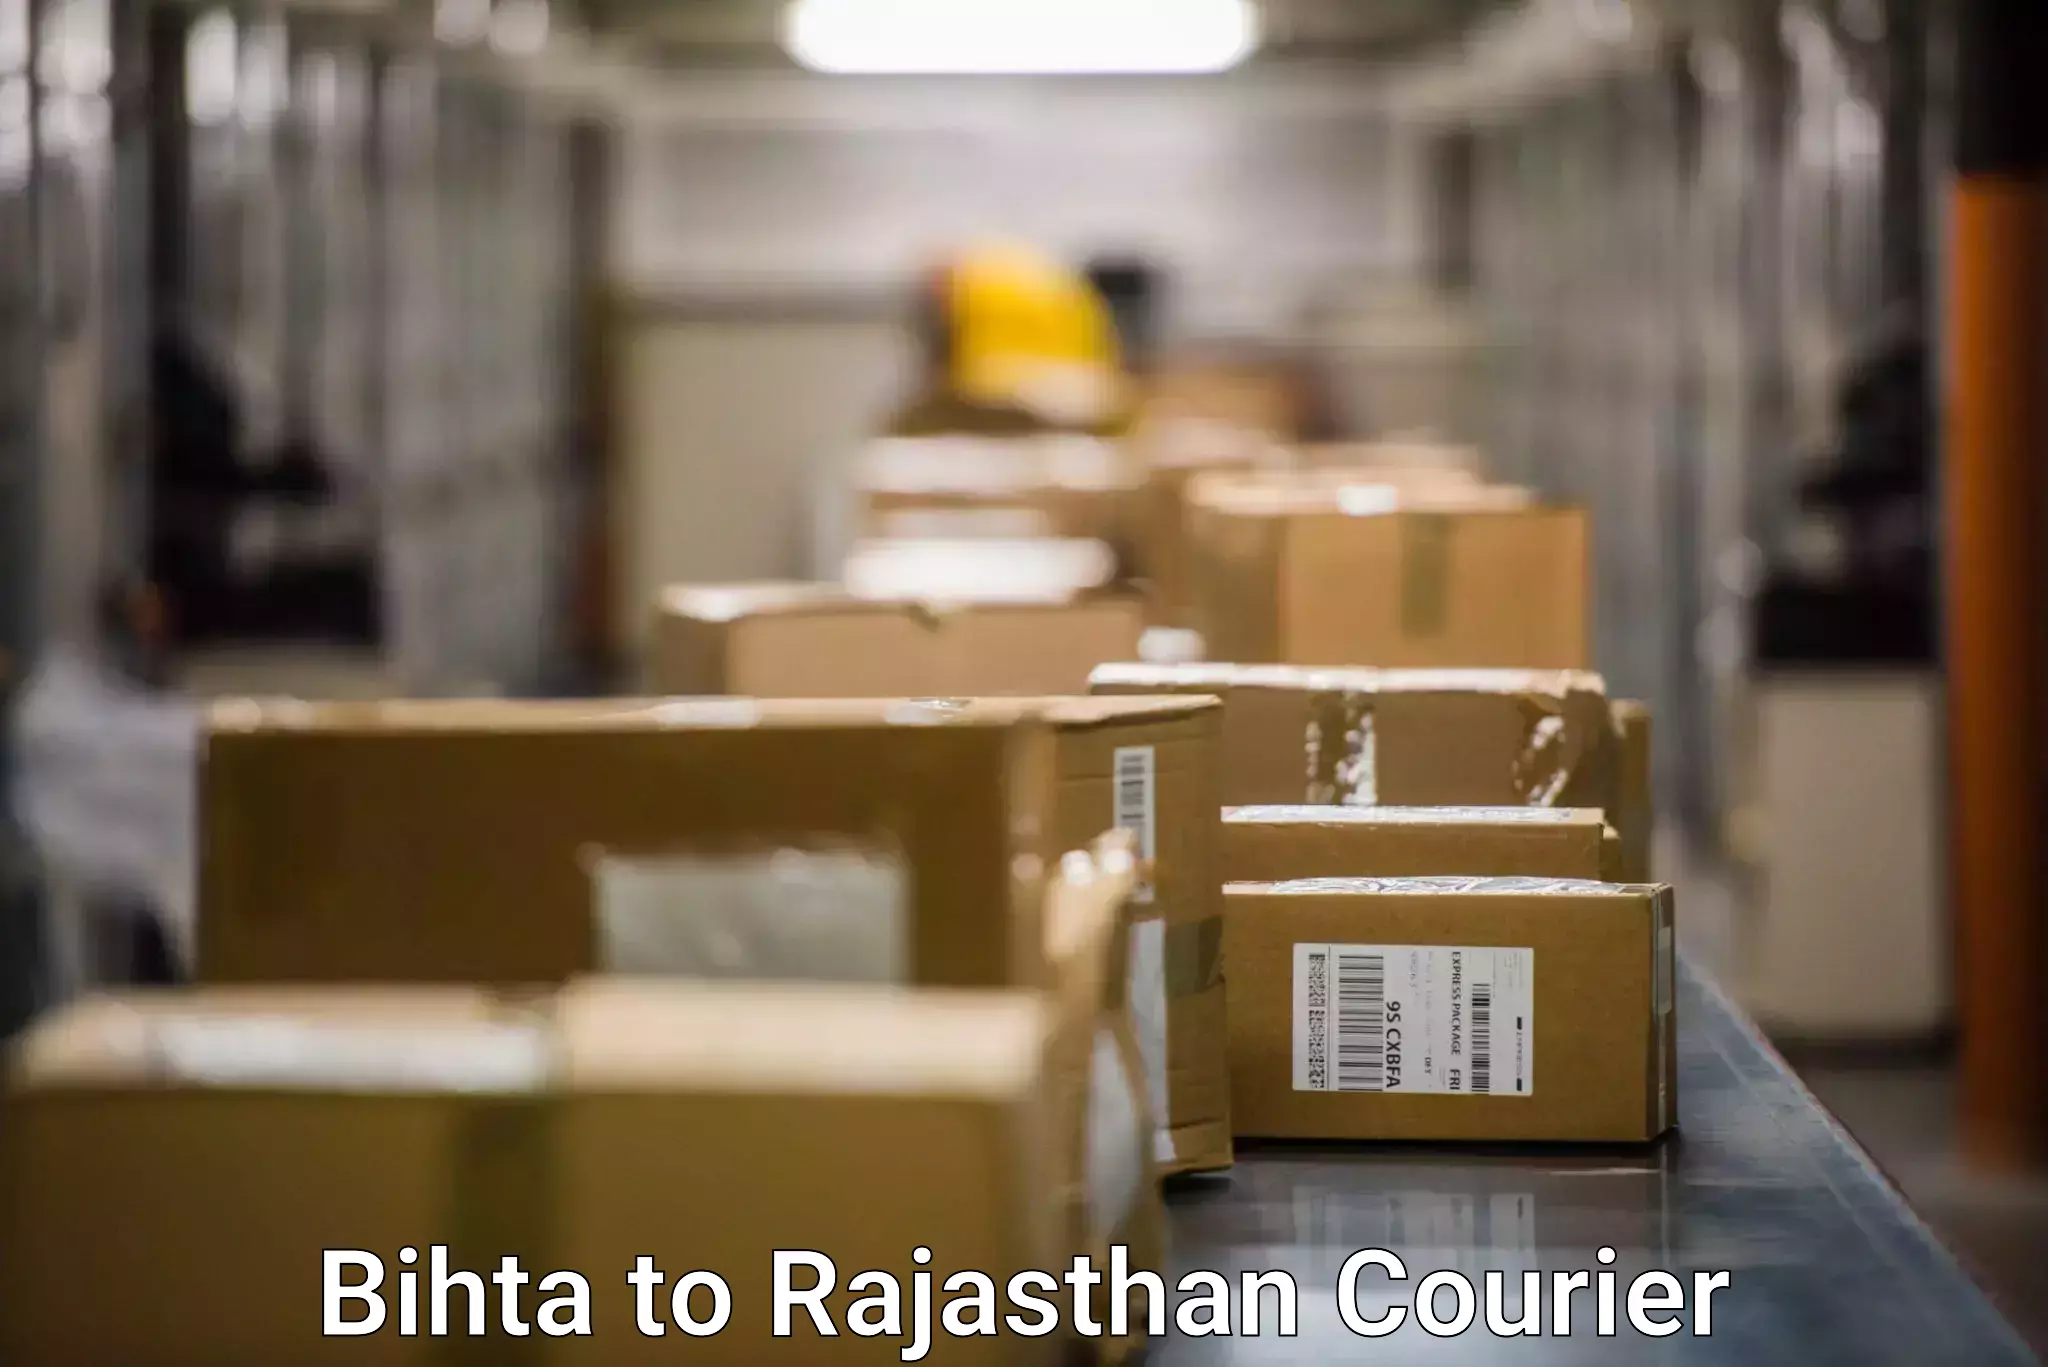 Courier service comparison Bihta to Hindaun